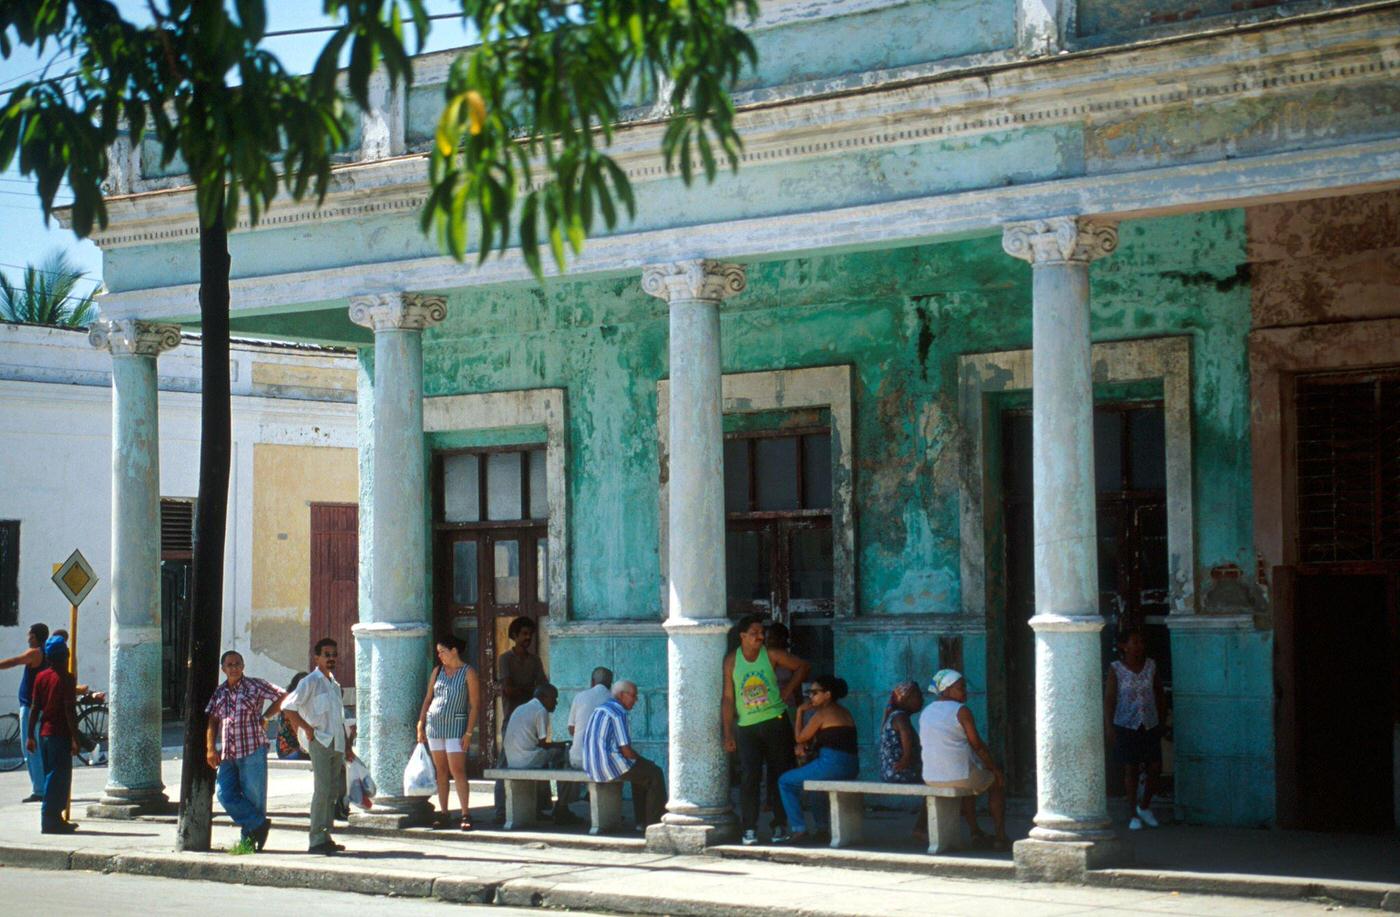 Cuban men and women standing under the arcade of a building in Cienfuegos, Cuba, 1990s.